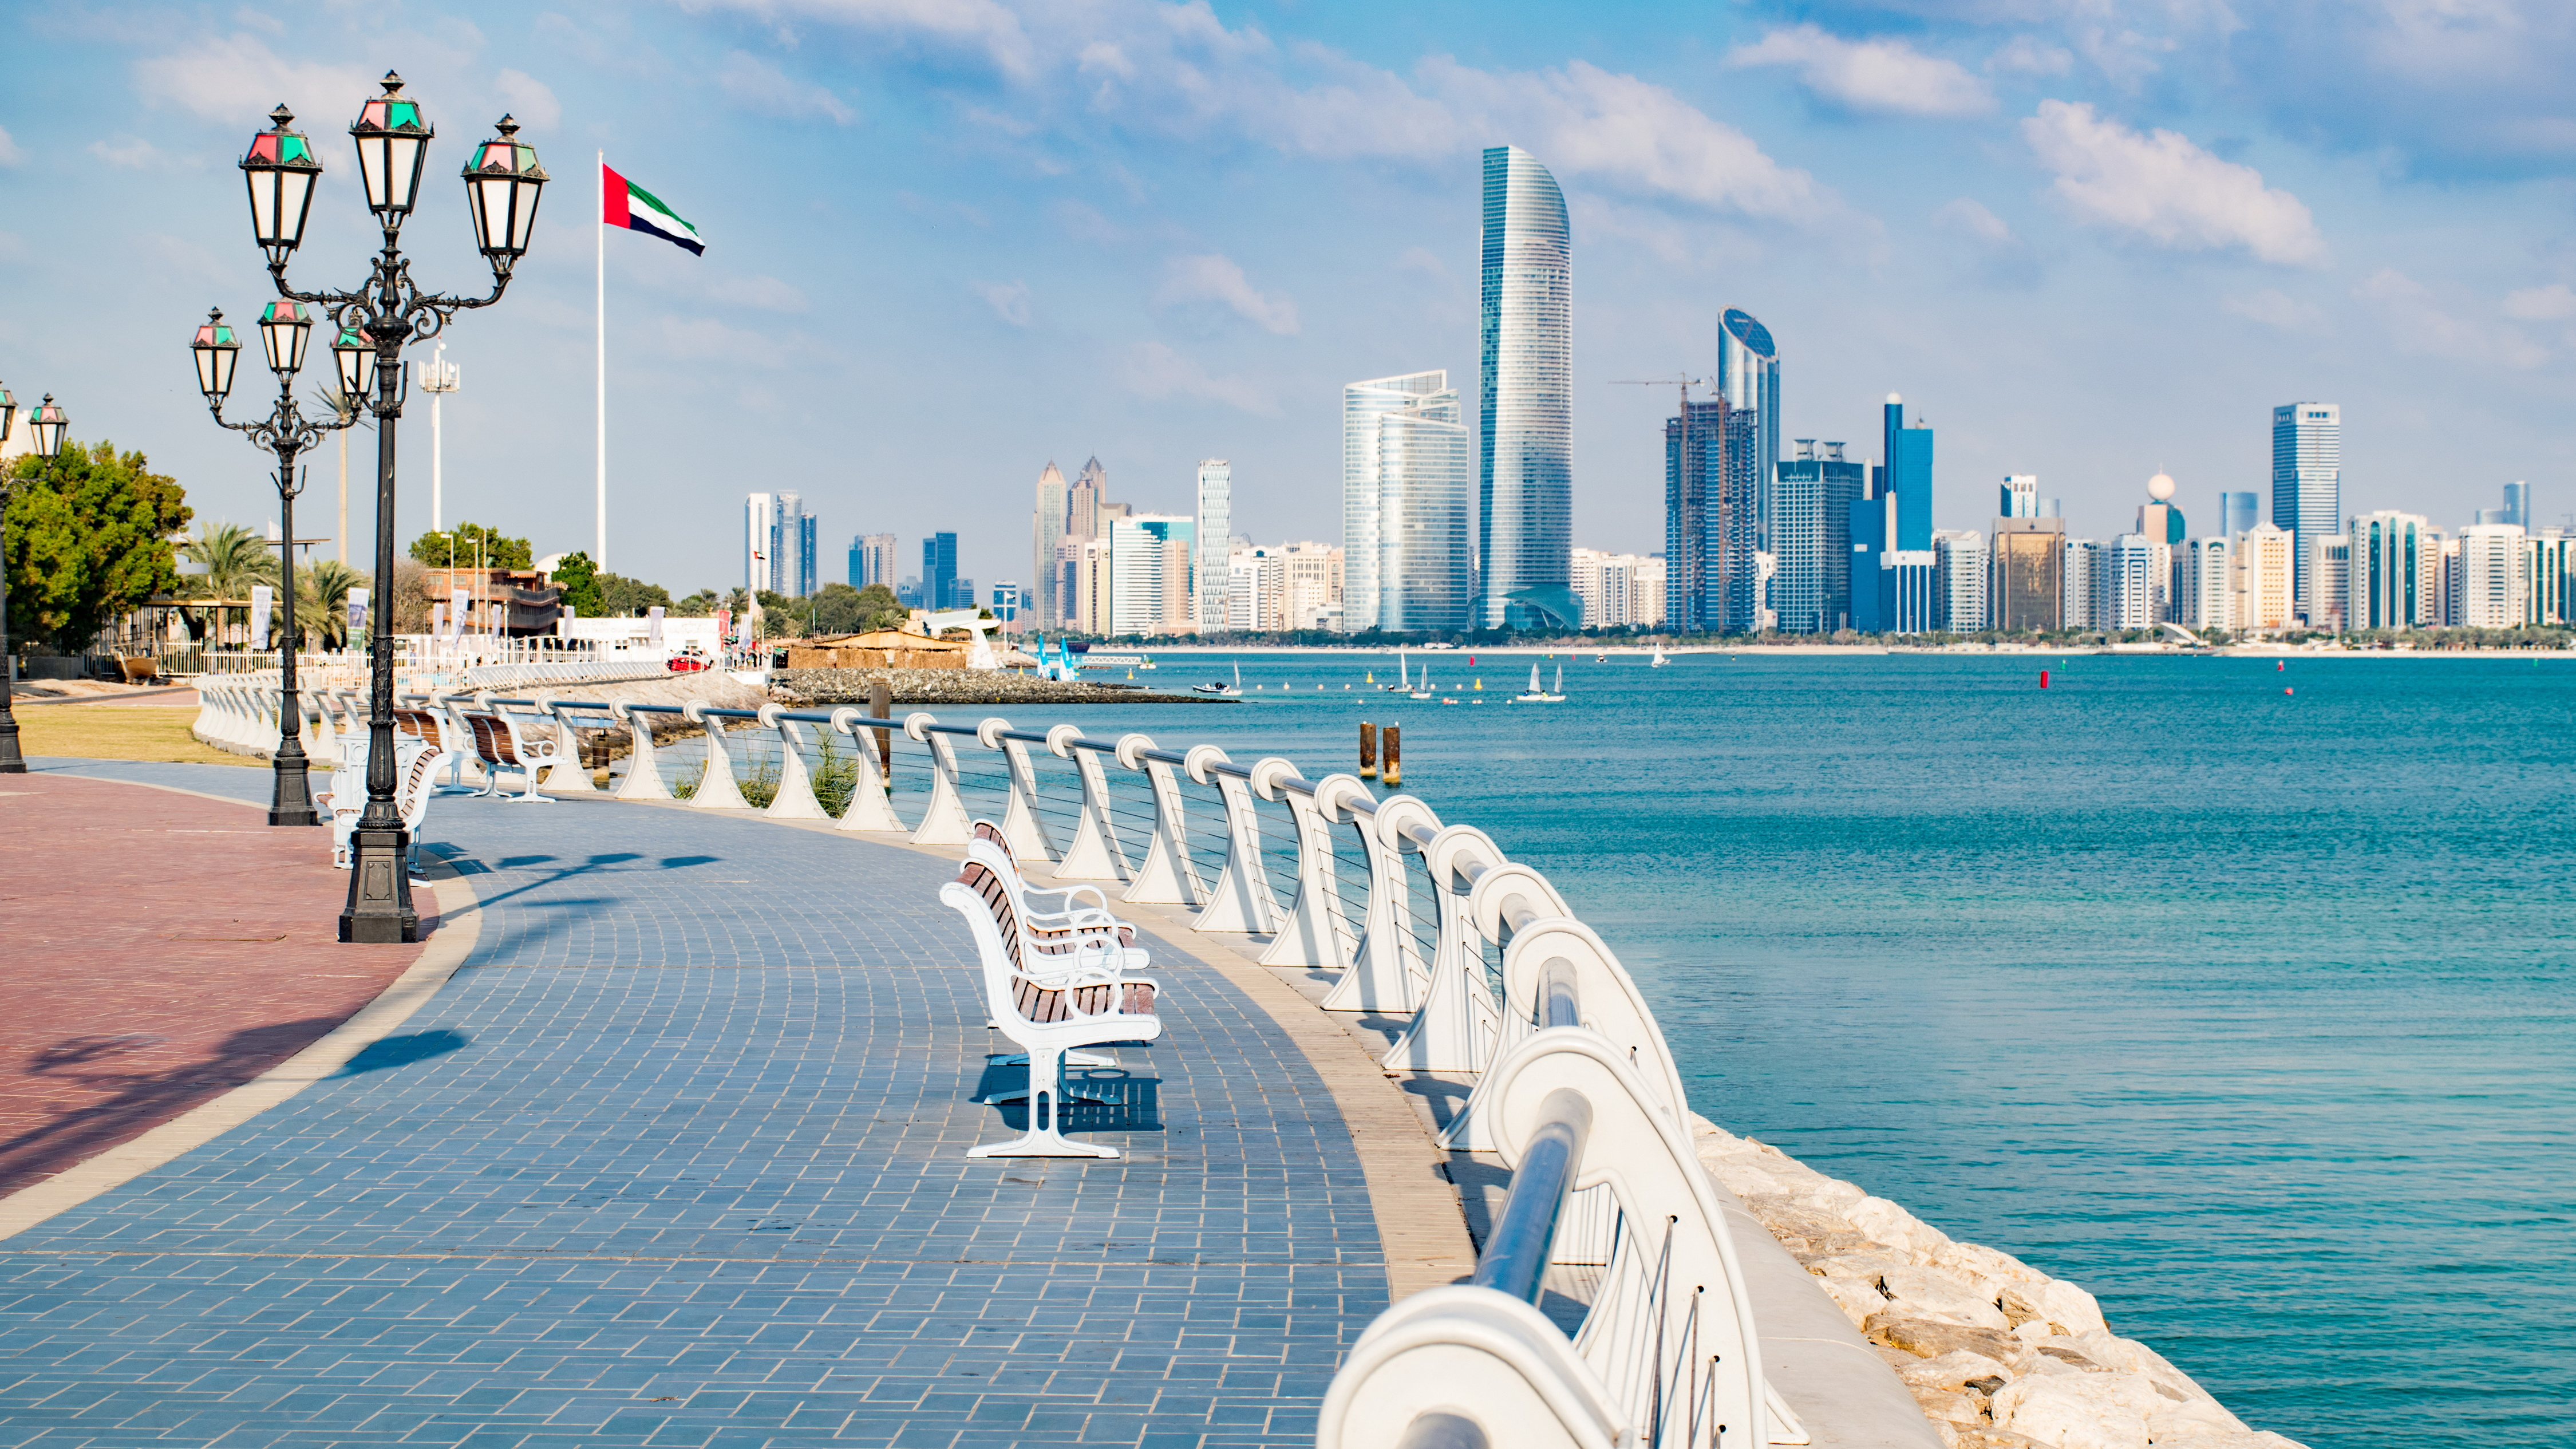 Абу-Даби, столица ОАЭ, куда могут переехать иностранцы